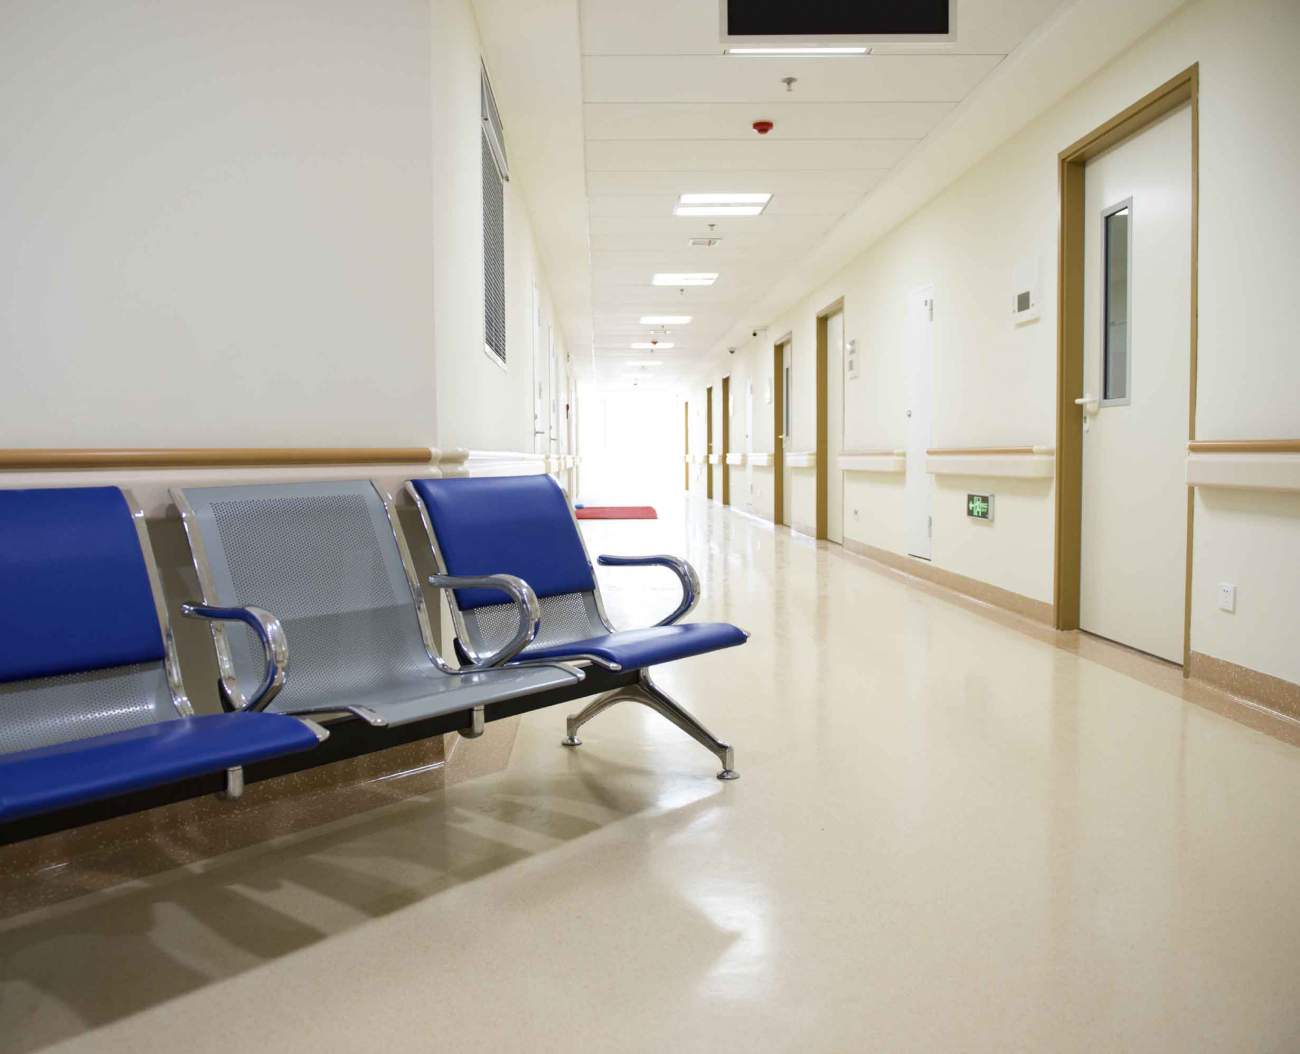 Hospital Corridor With Small Waiting Area